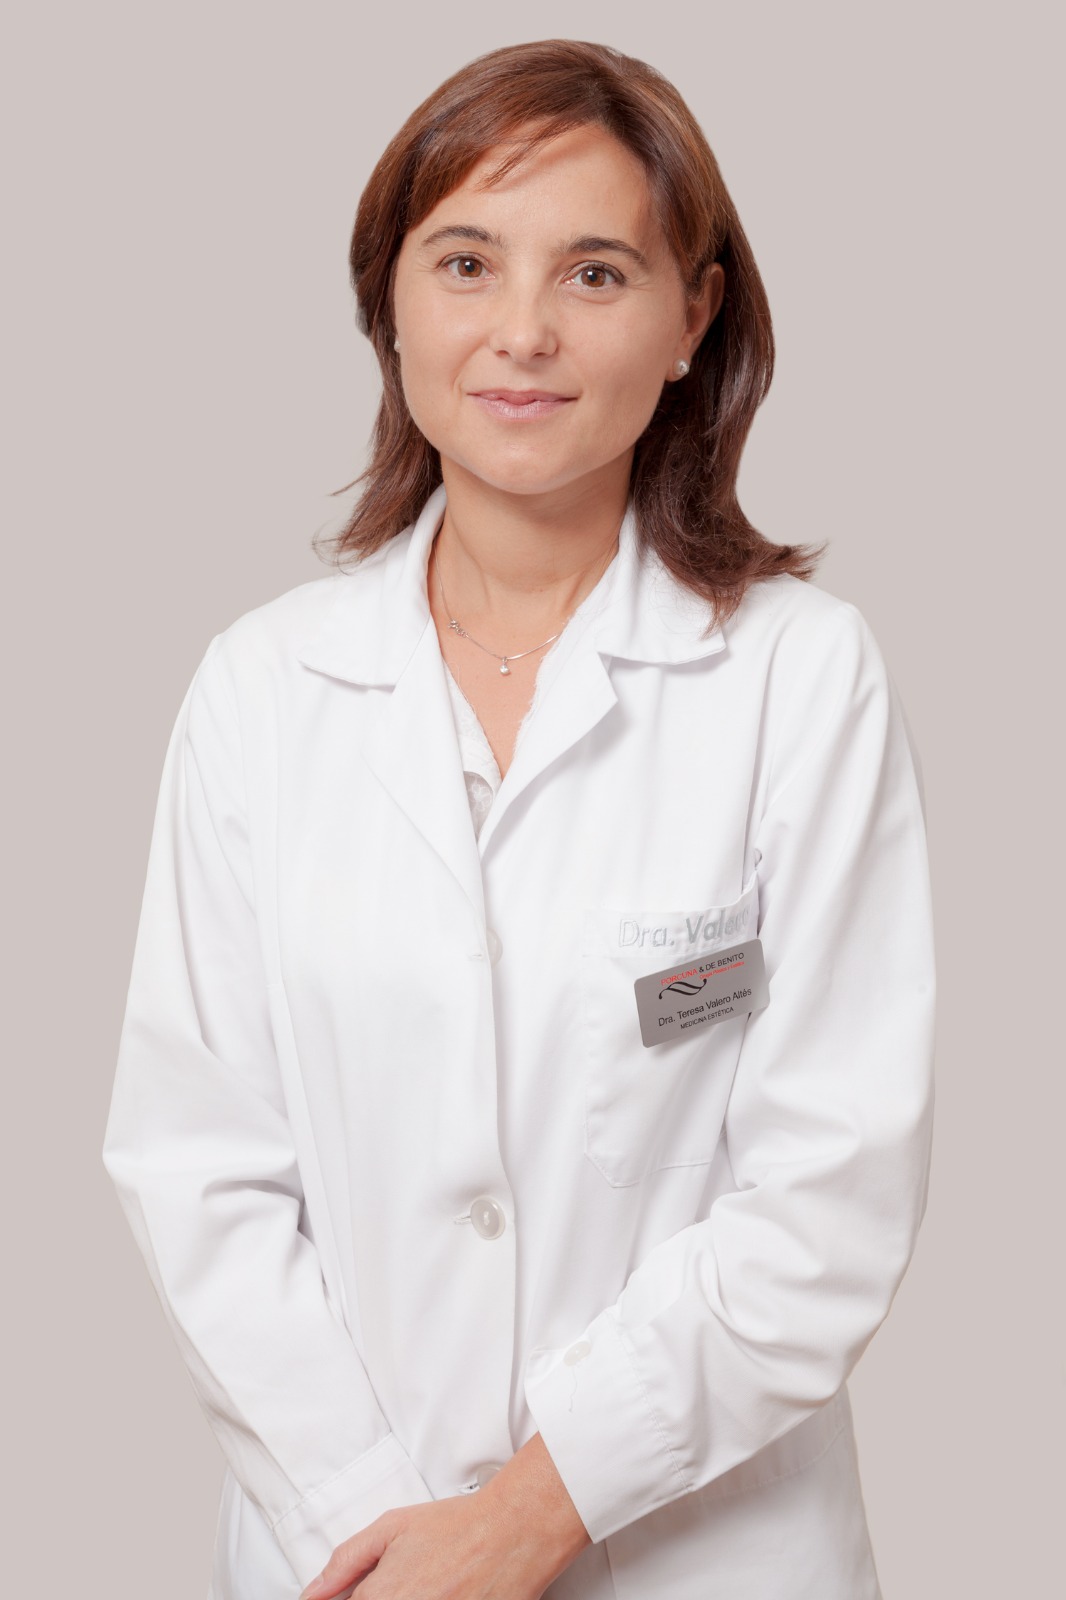 Dra. Teresa Valero